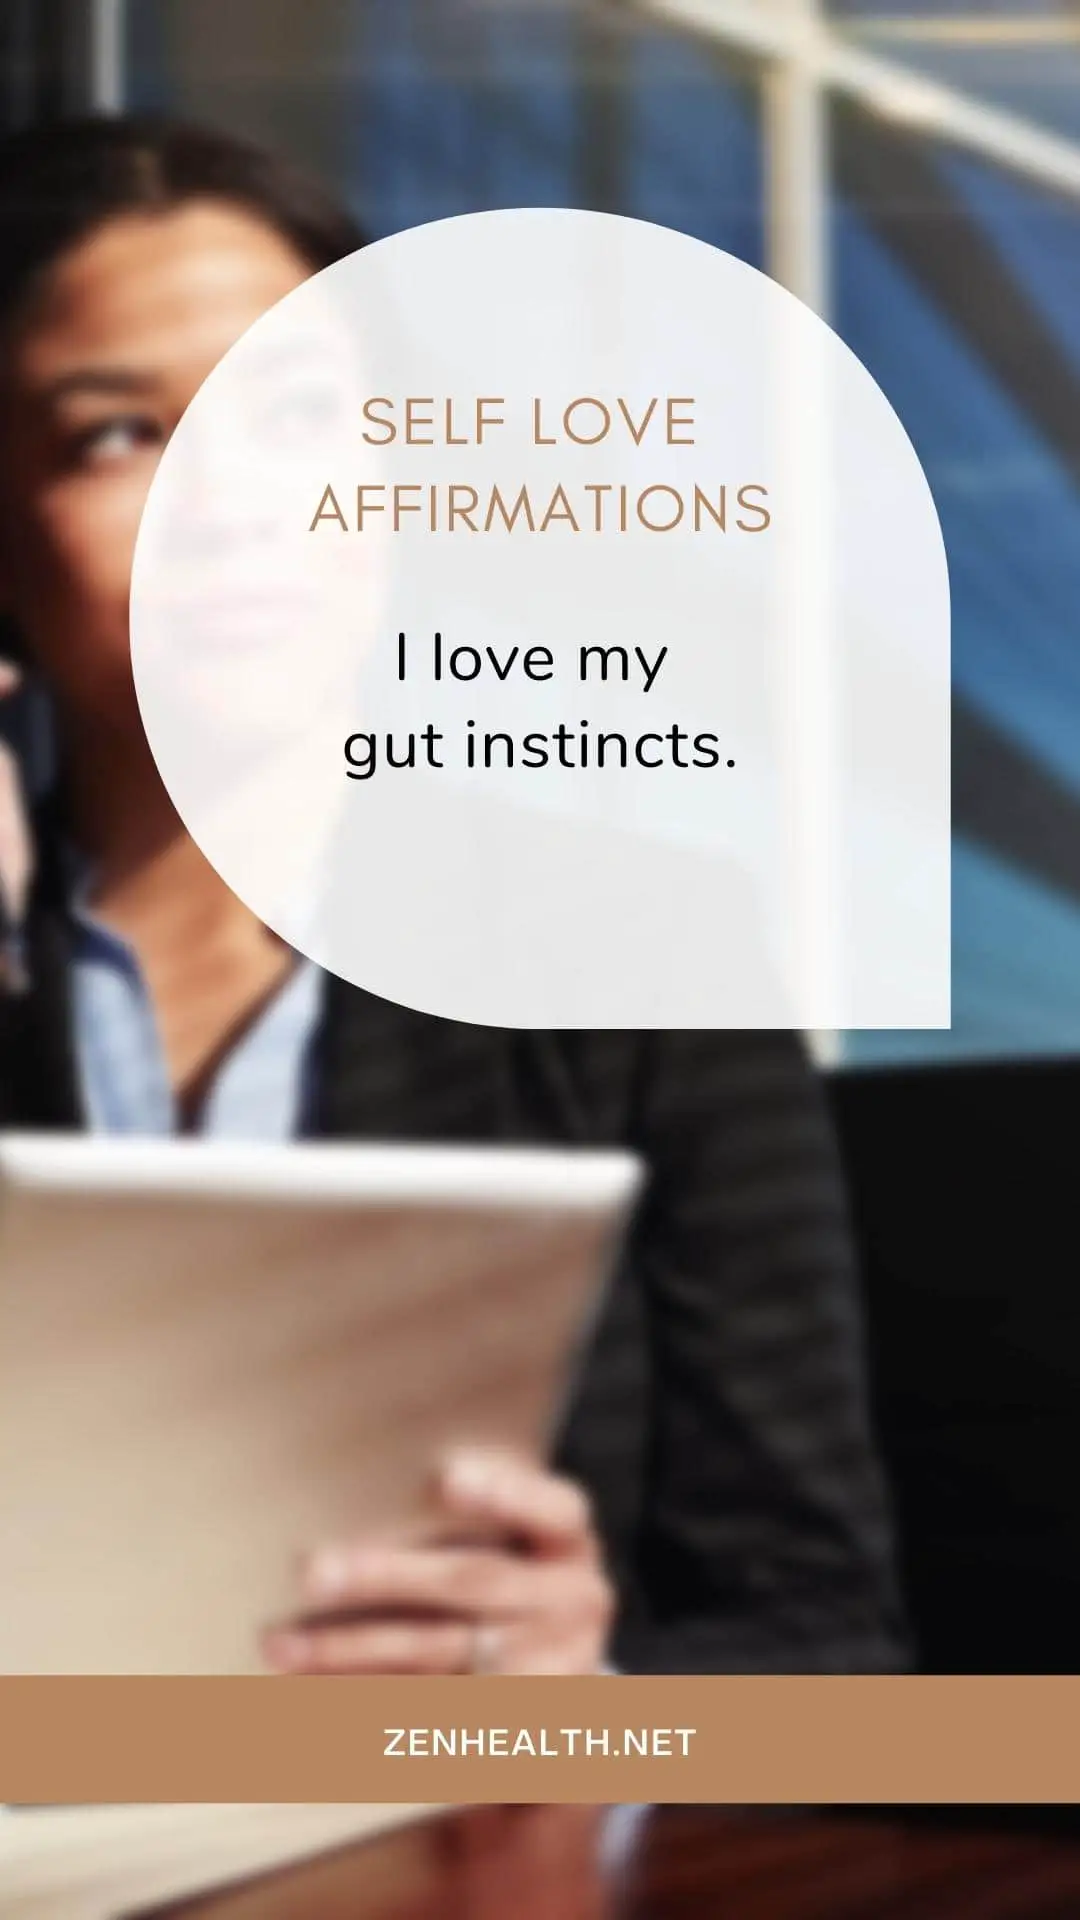 Self love affirmations: I love my gut instincts